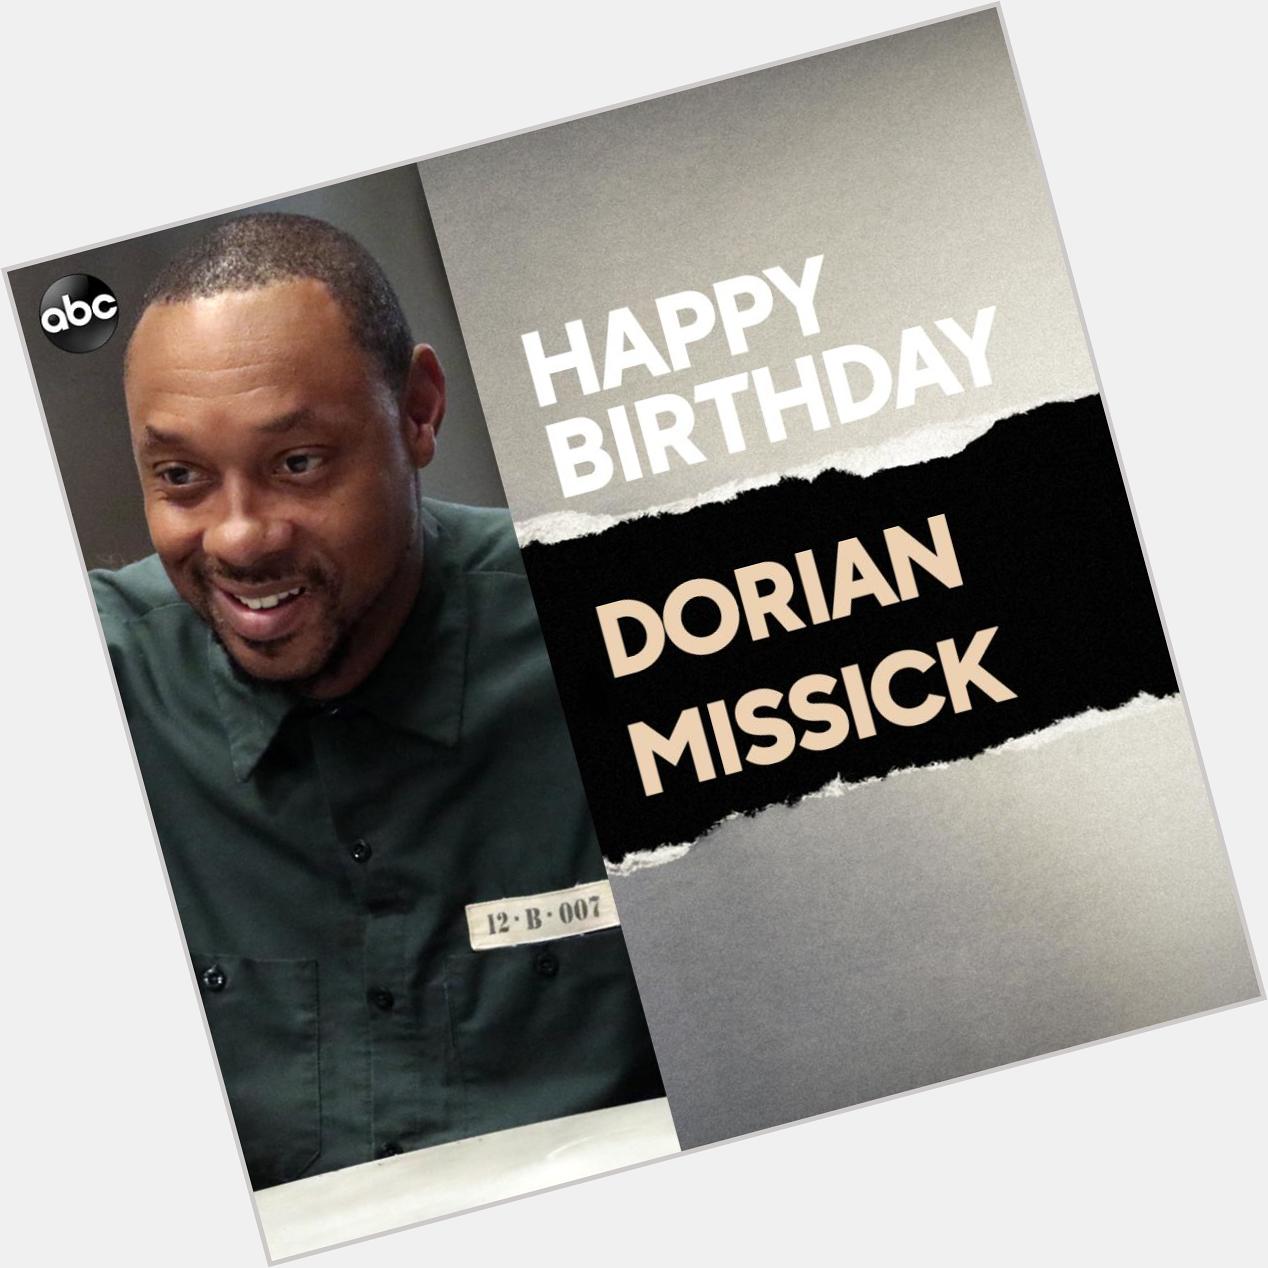 Wishing a very happy birthday to Dorian Missick!  